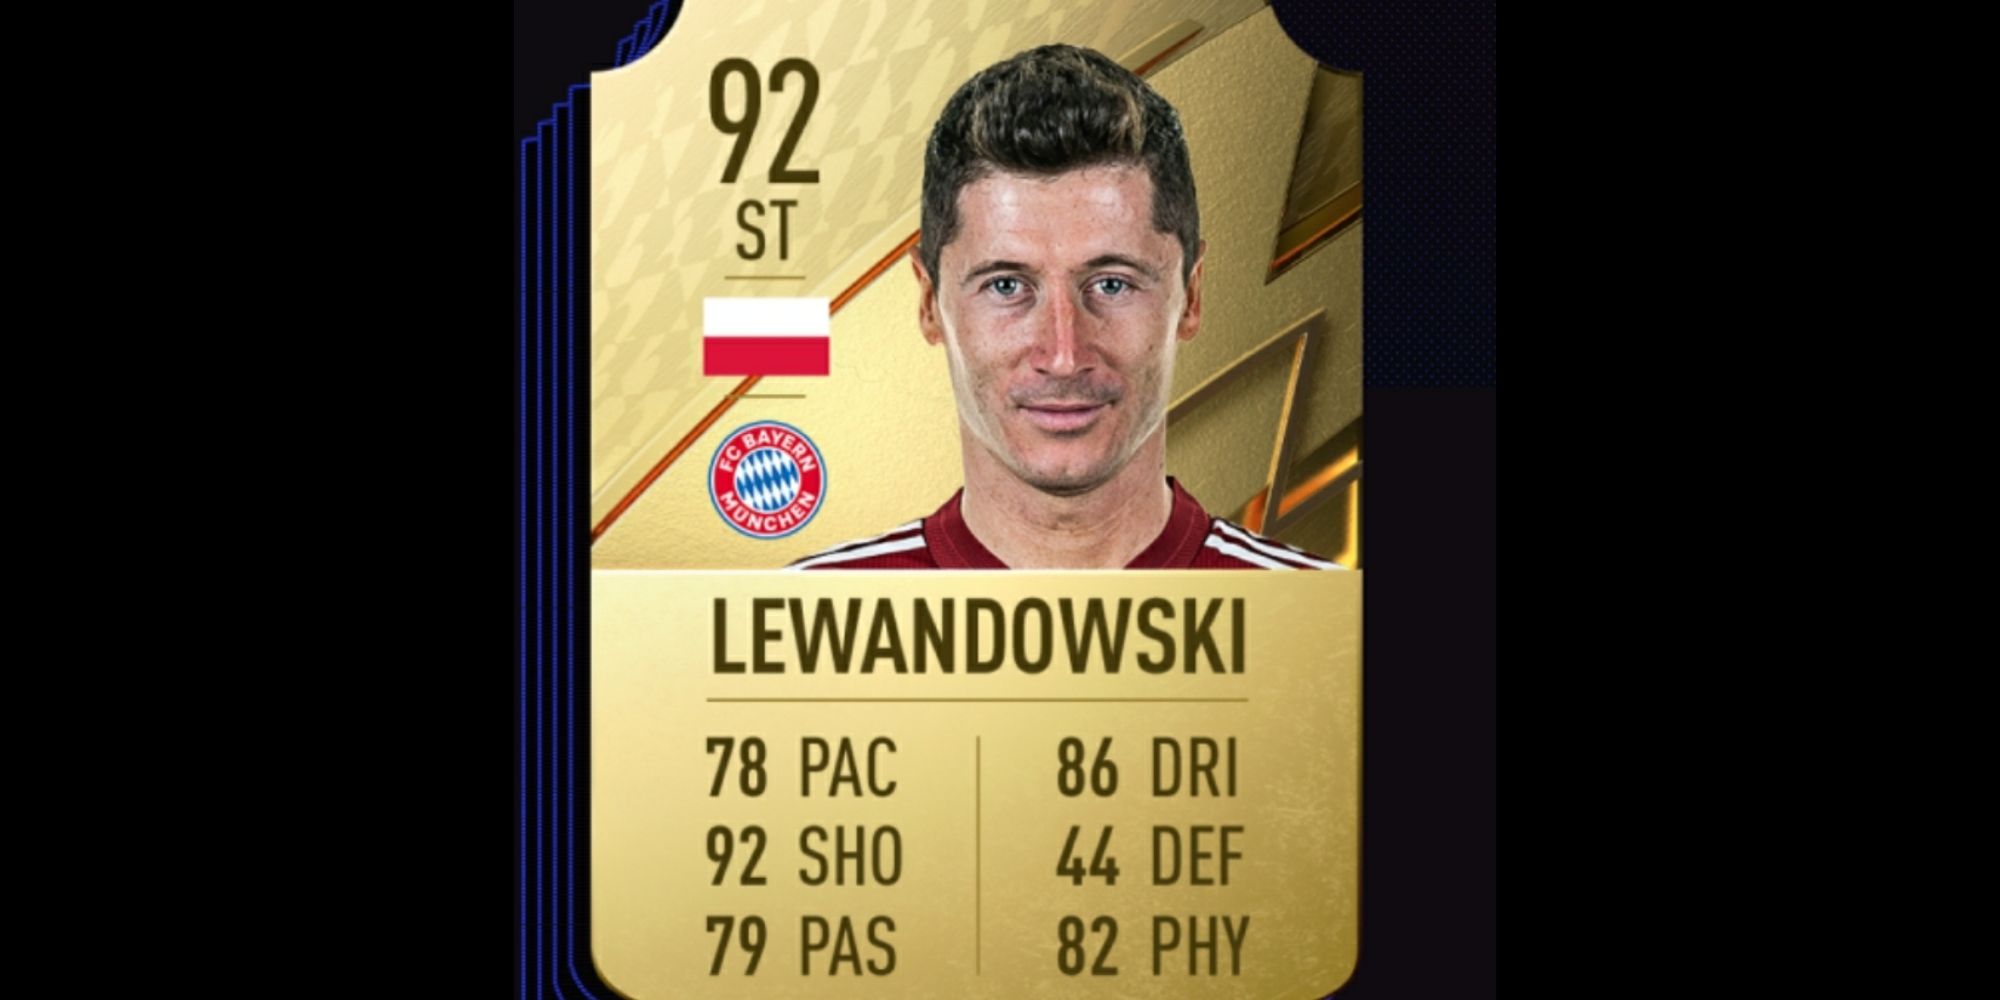 Lewandowski Card in FIFA 22